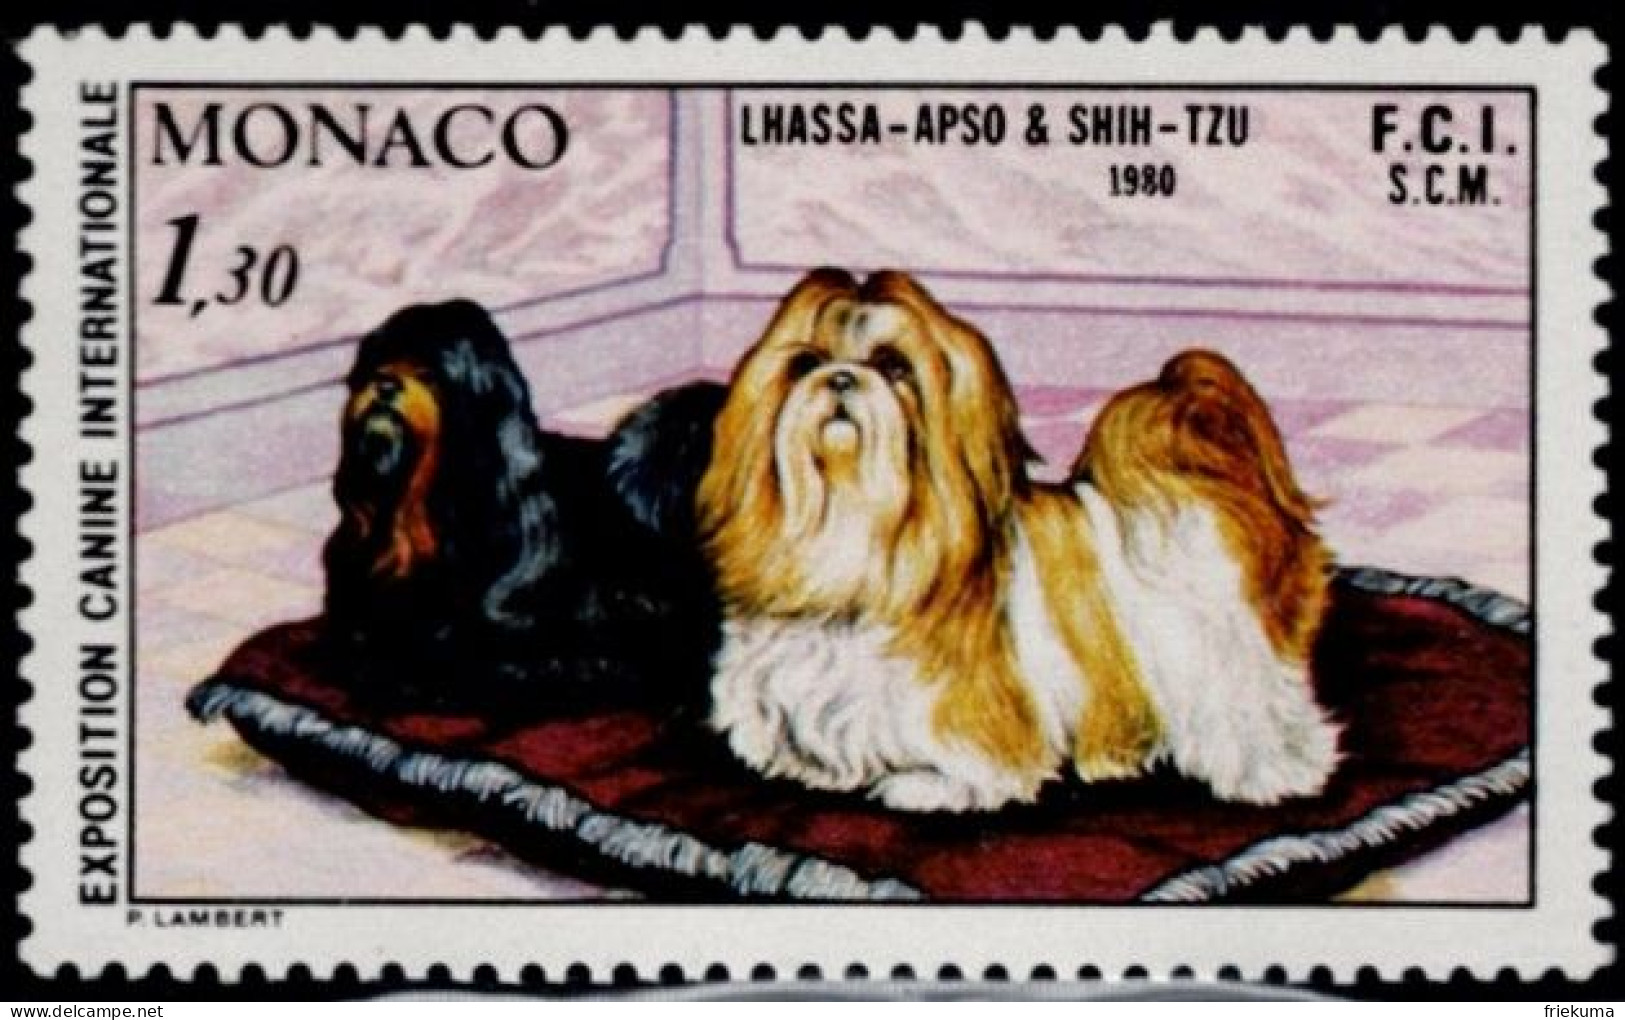 Monaco 1980, Exposition Canine Internationale/International Dog Show, Monte Carlo: Lhasa-Apso And Shih-Tzu, MiNr. 1035 - Perros